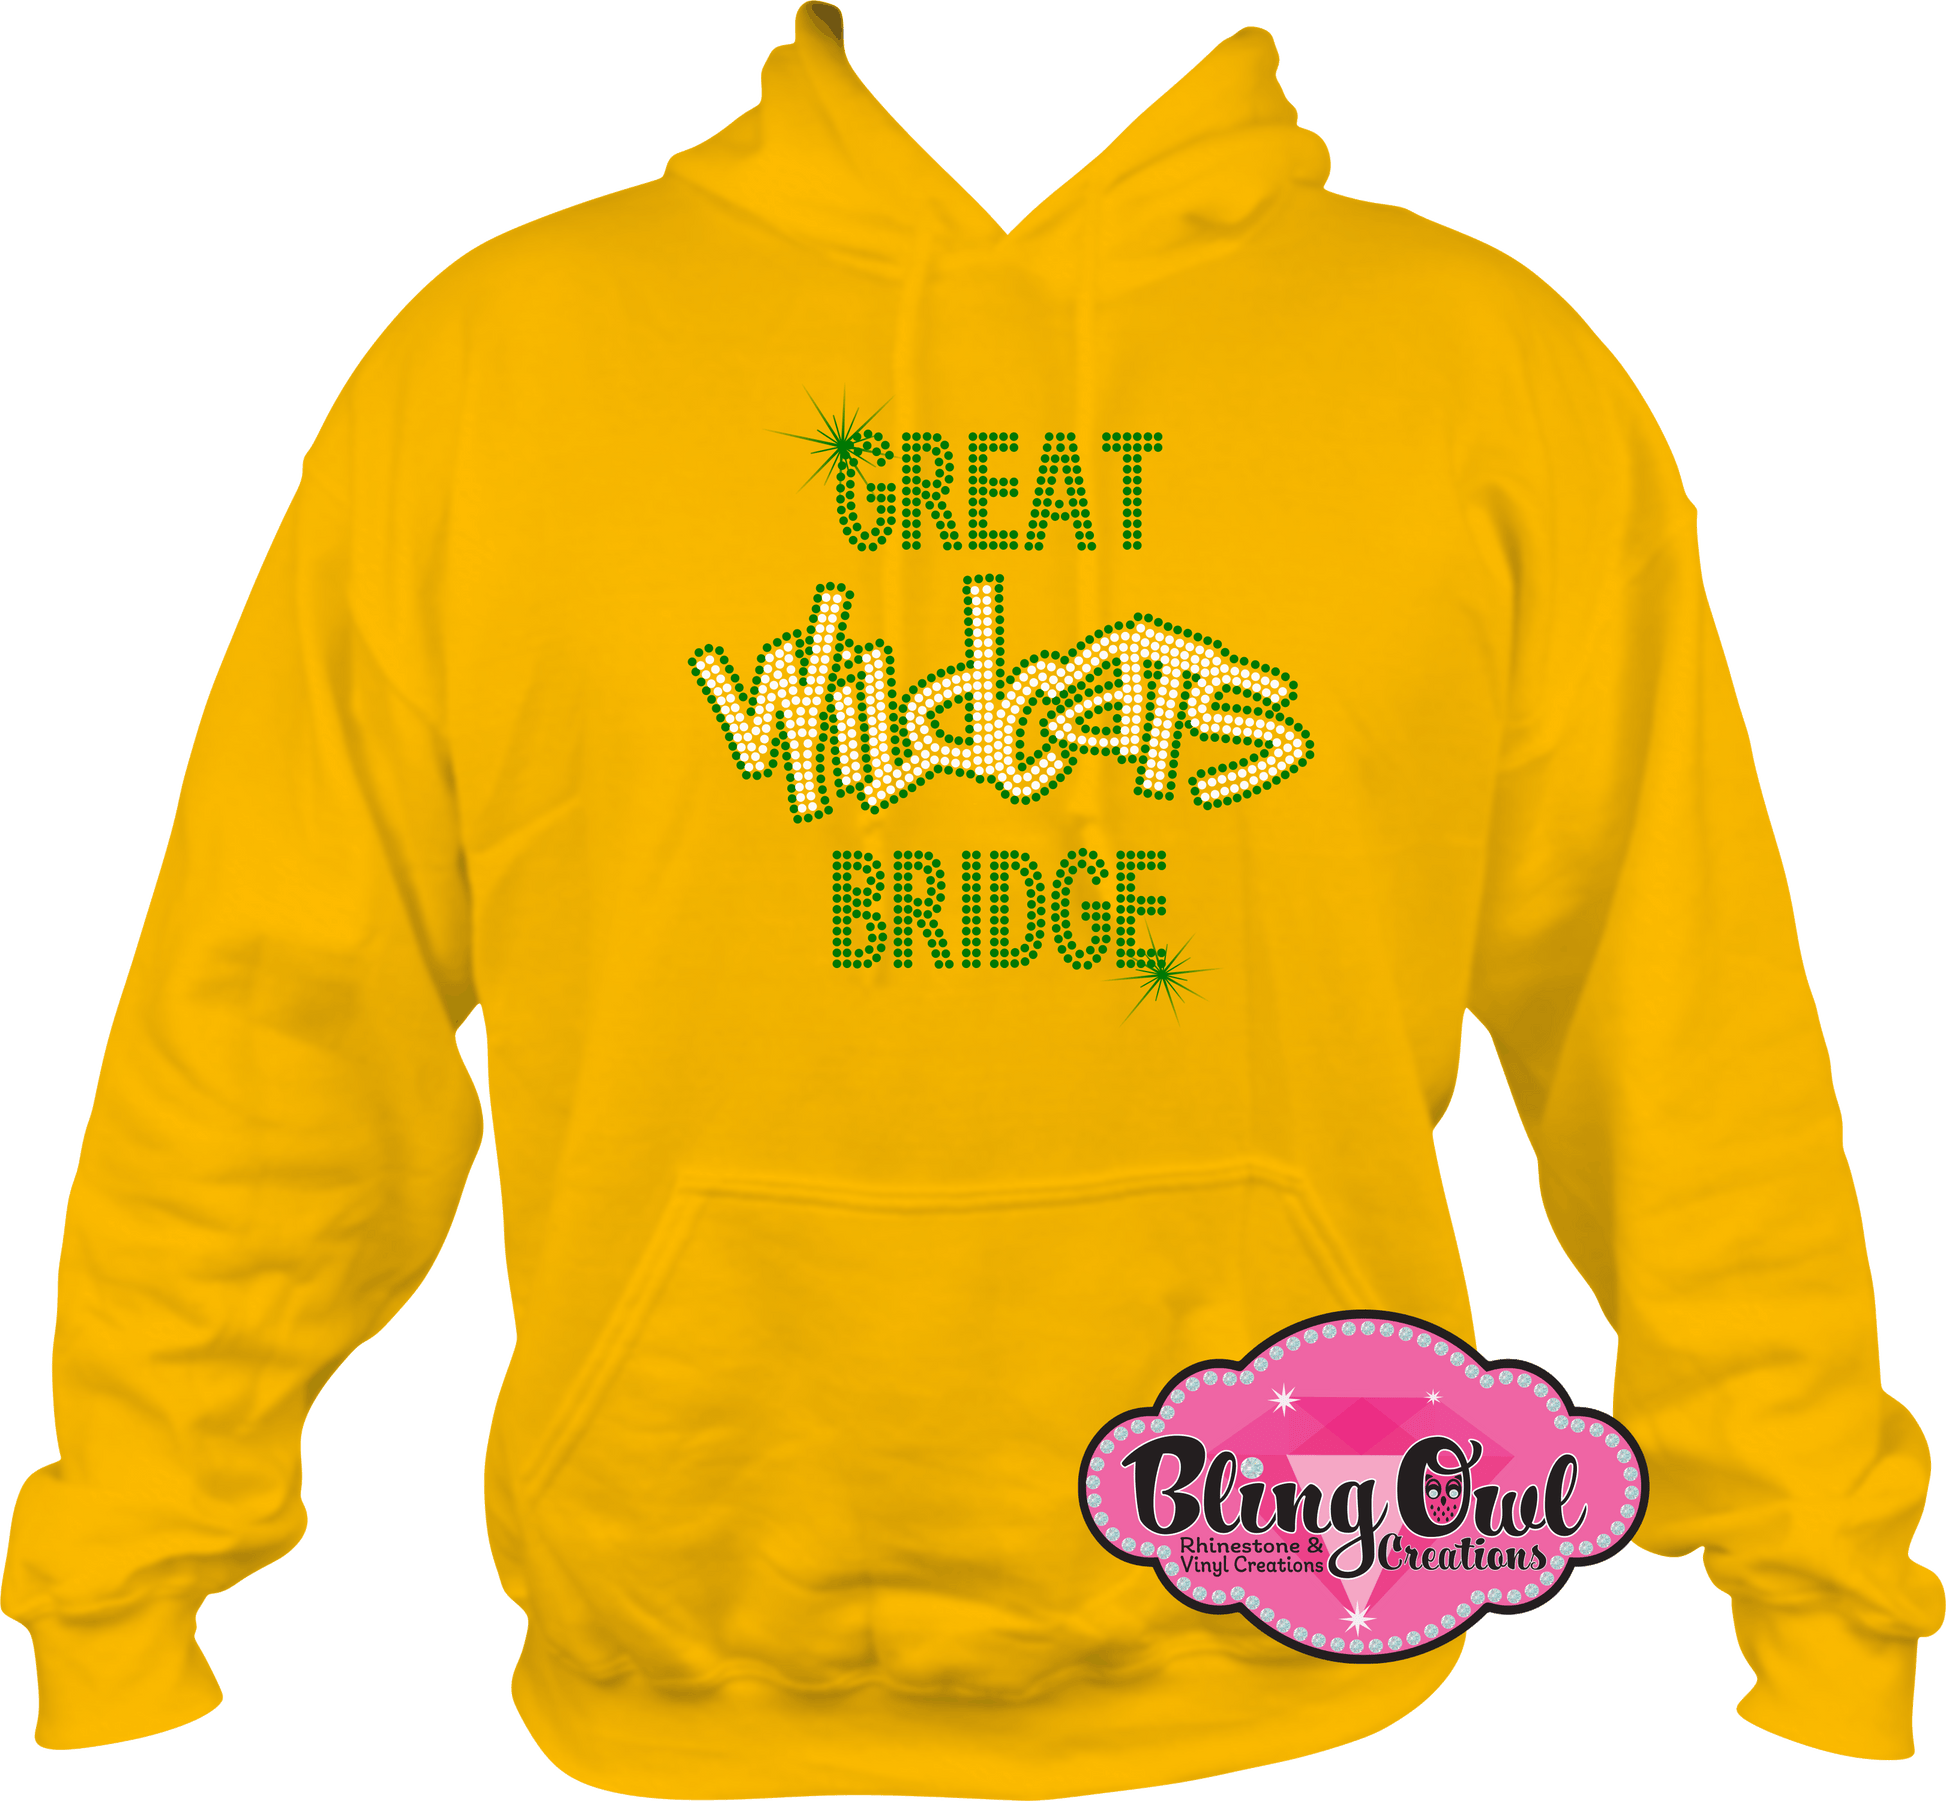 great_bridge wildcats school_spirit_wear sweatshirt rhinestones sparkle bling